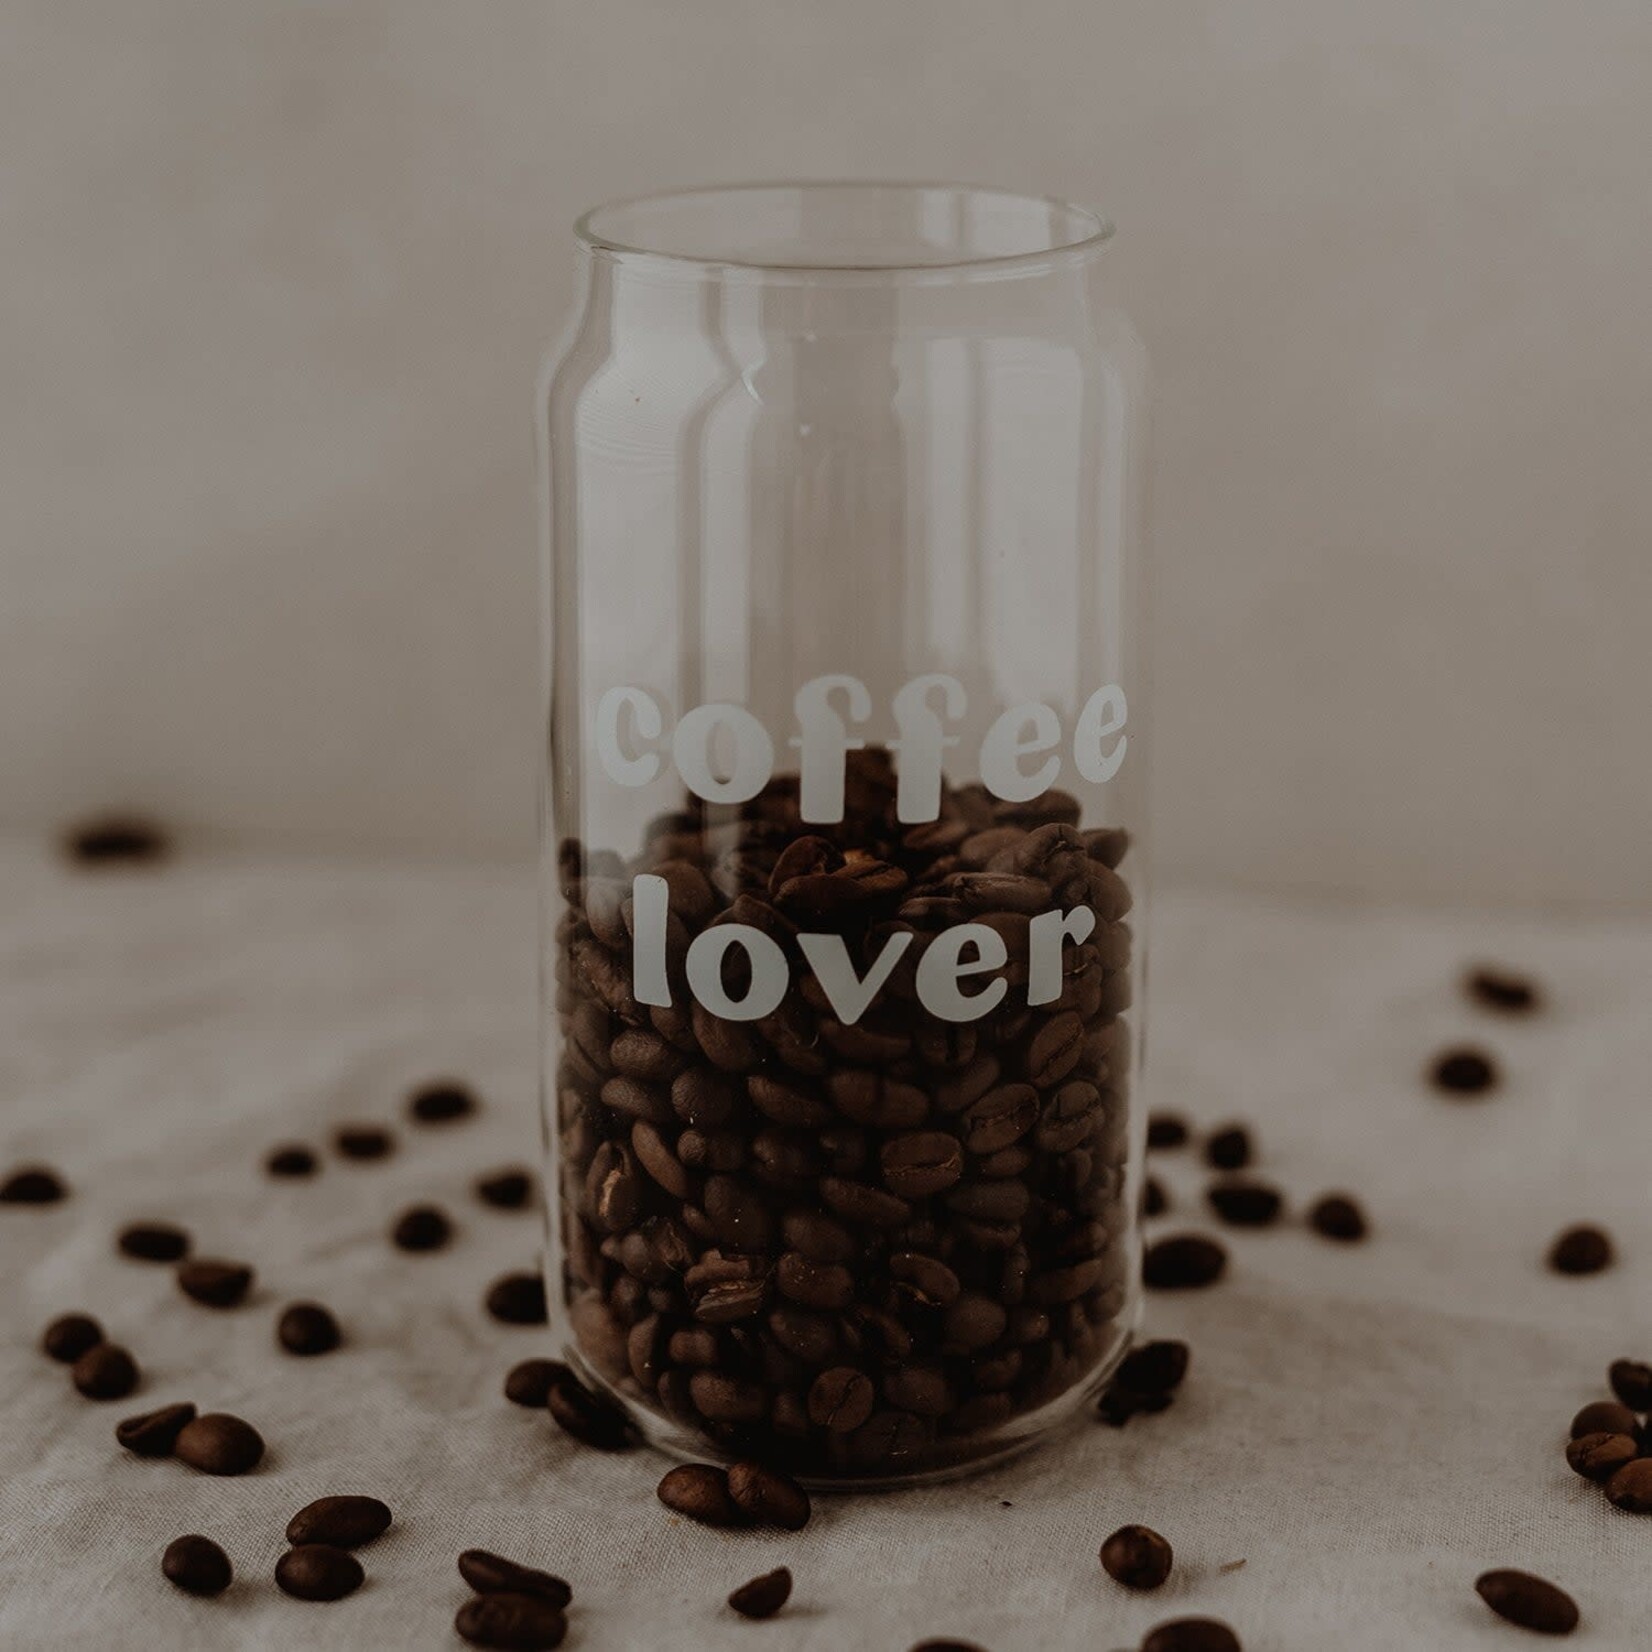 Eulenschnitt Coffee Lover - Tall Drinking Glass